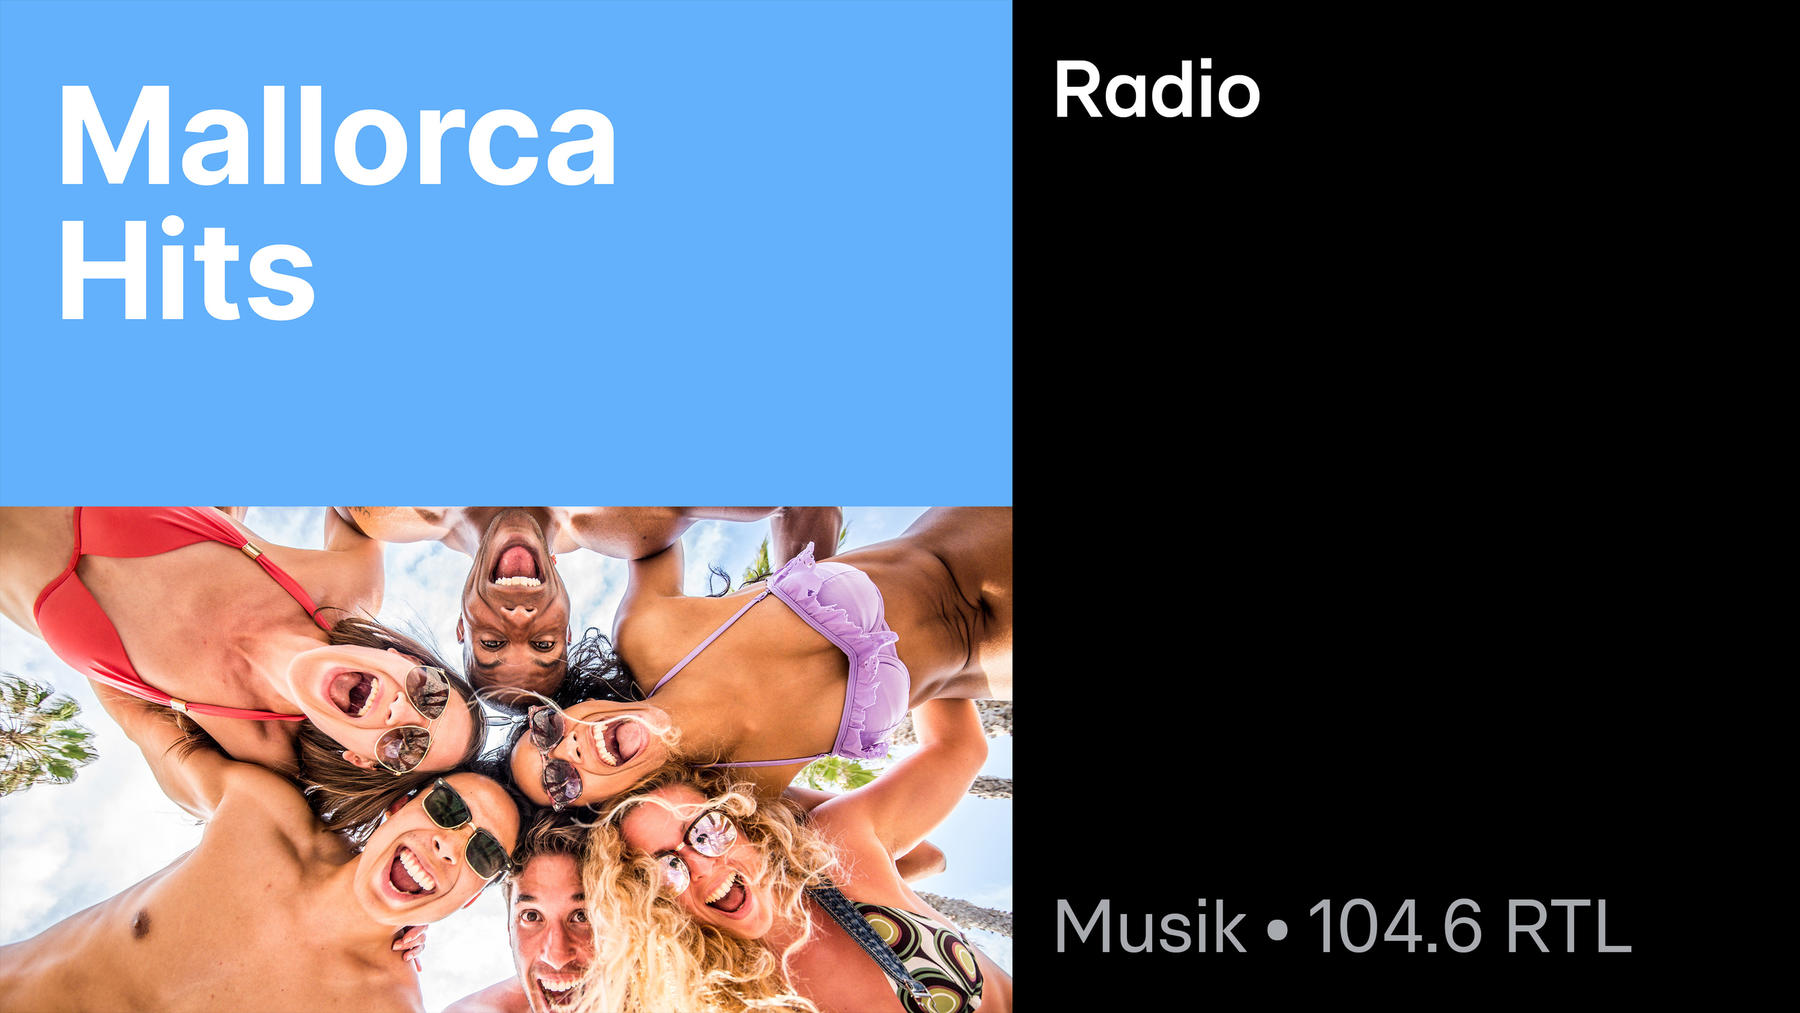 Radio Mallorca Hits